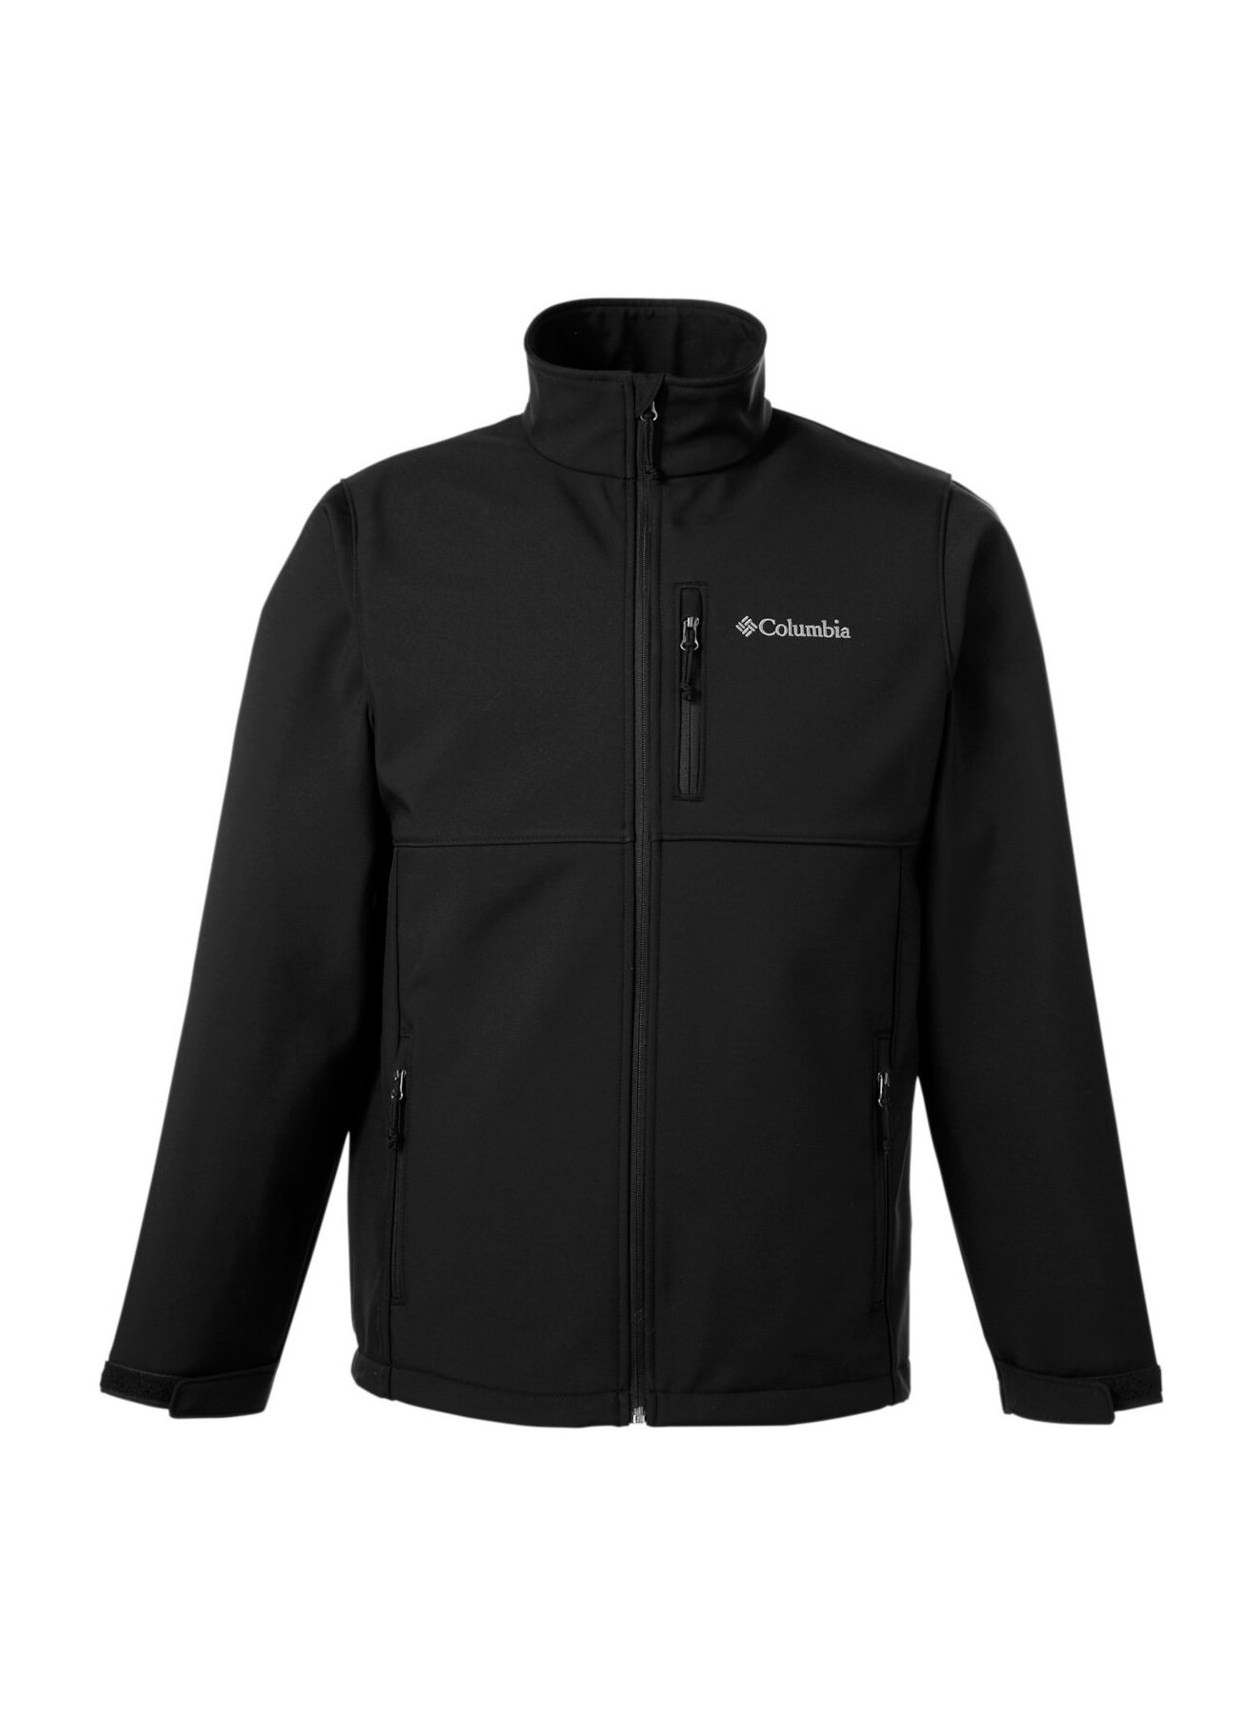 Corporate Columbia Men's Black Ascender Soft Shell Jacket